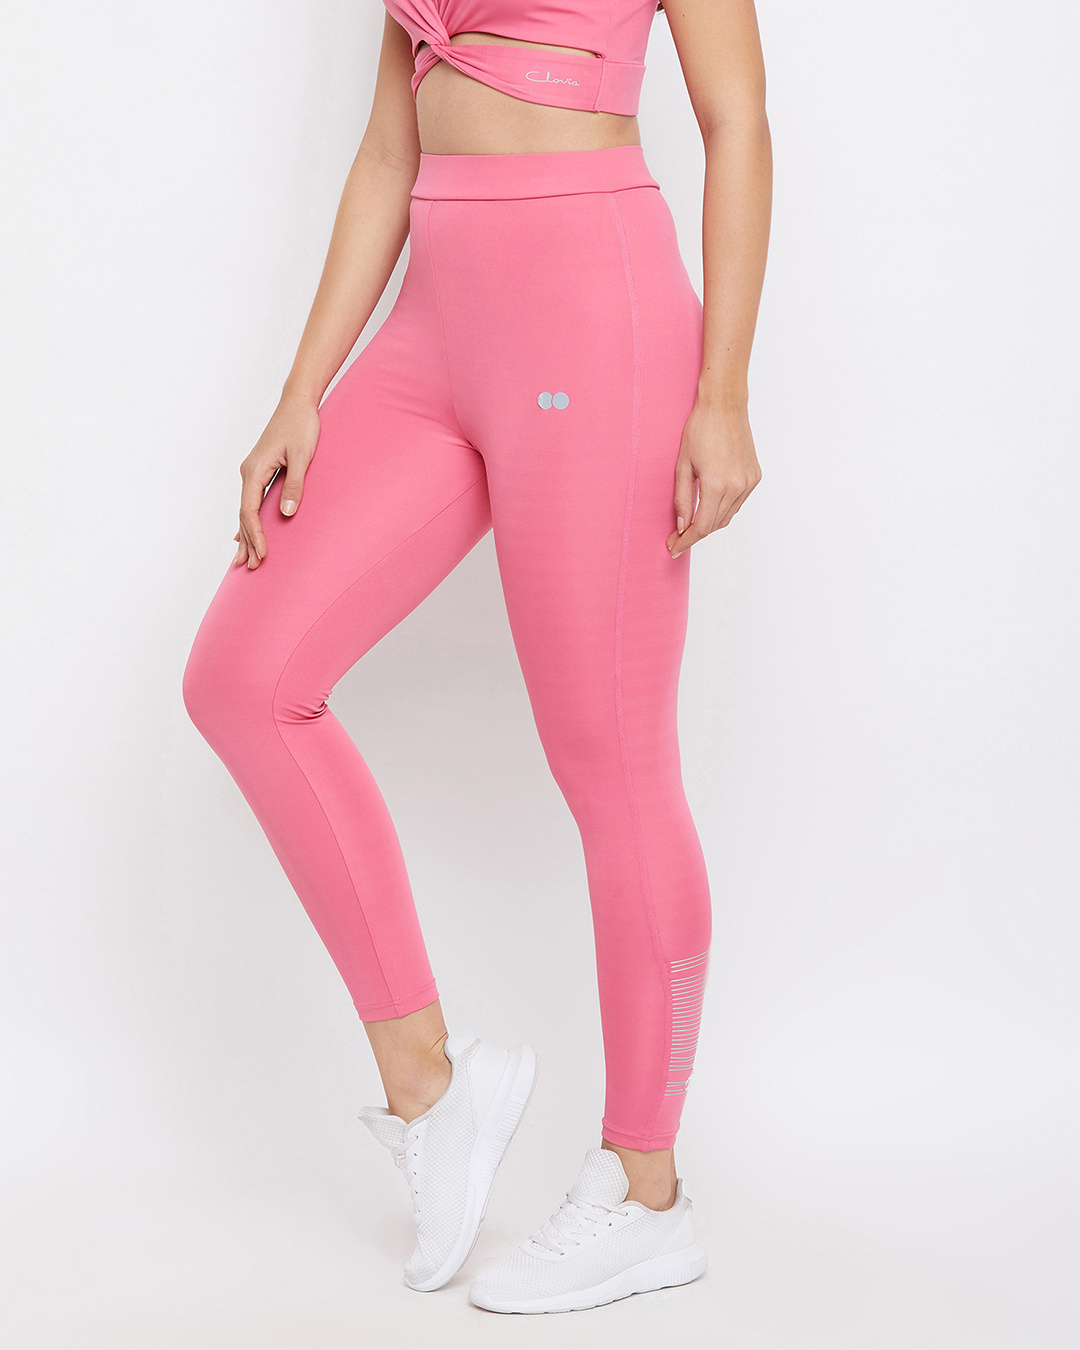 Shop Snug Fit Active Ankle Length Tights In Pink-Back